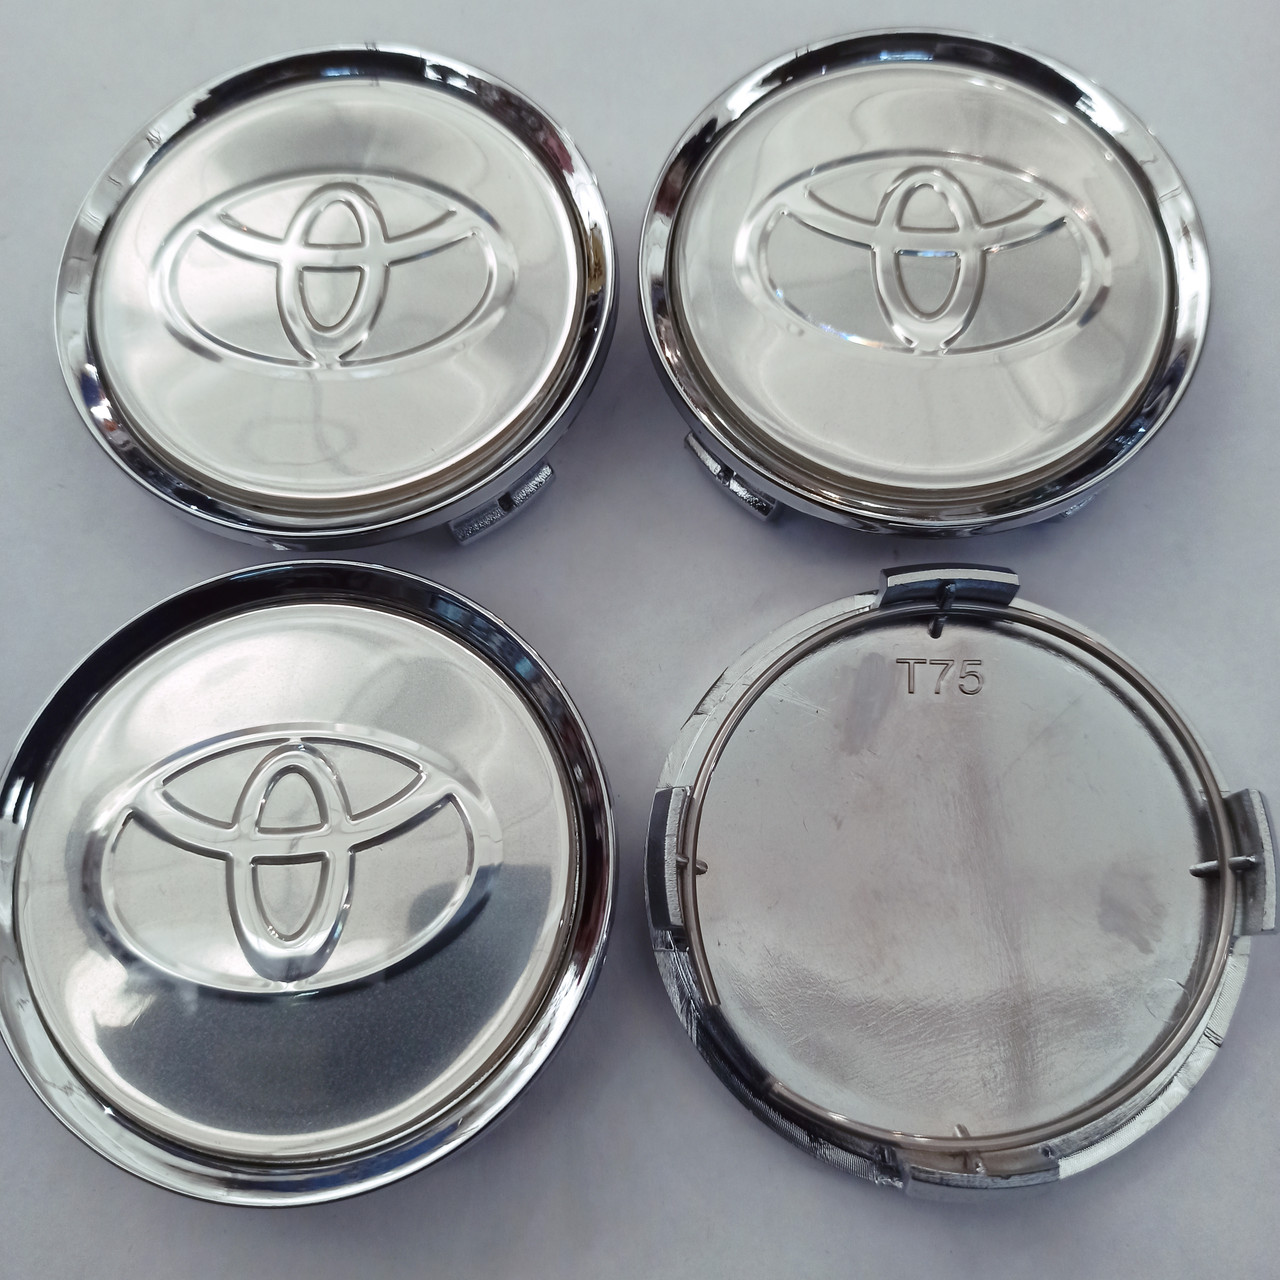 Ковпачки в диски Toyota 70*74 мм